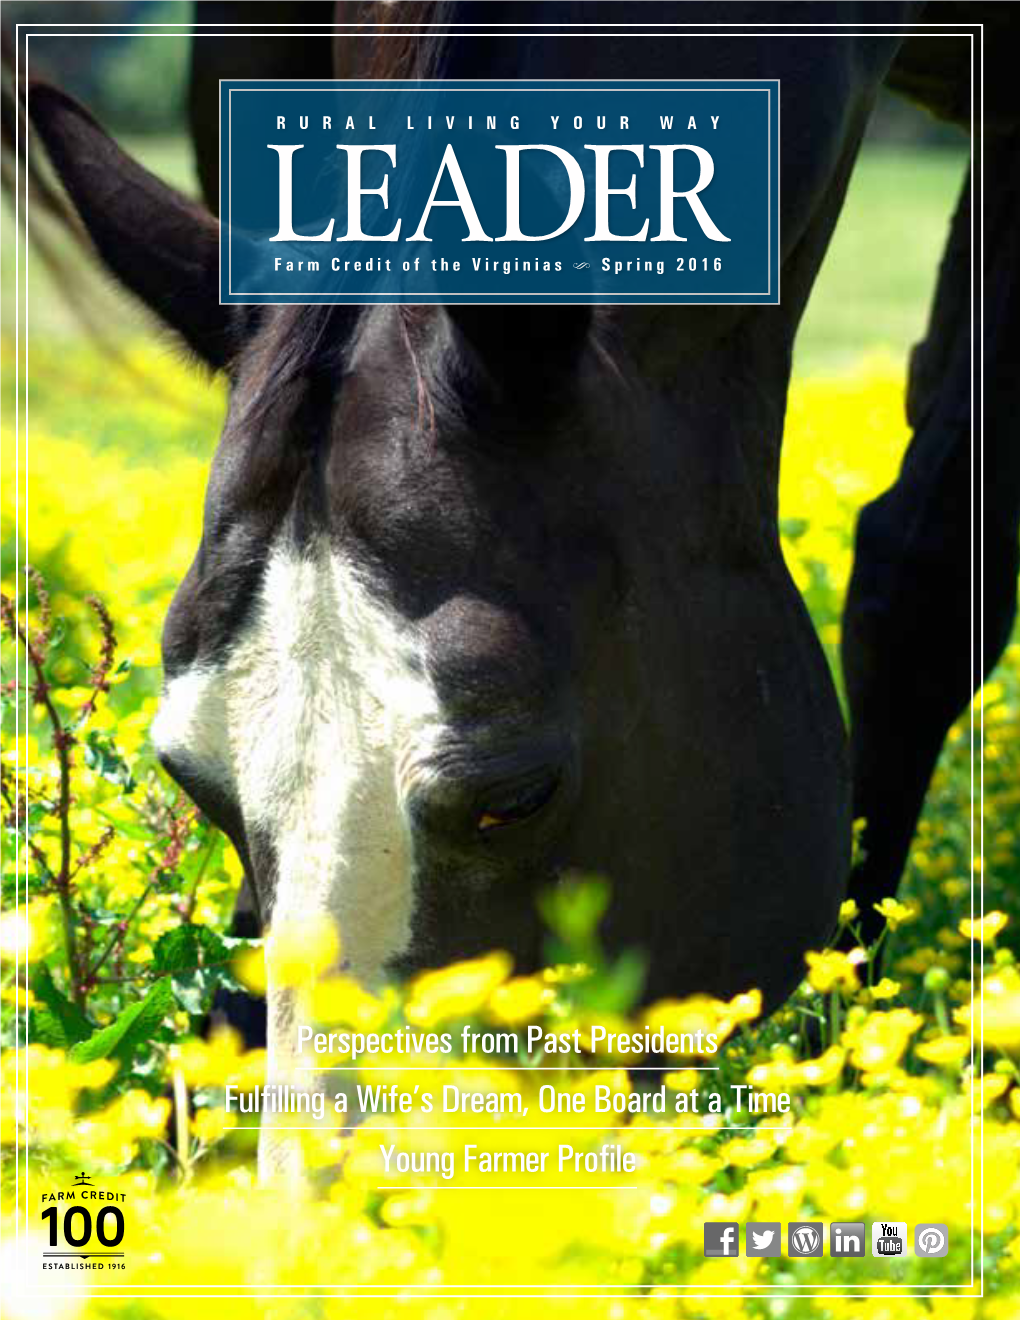 Leader Farm Credit of the Virginias Spring 2016